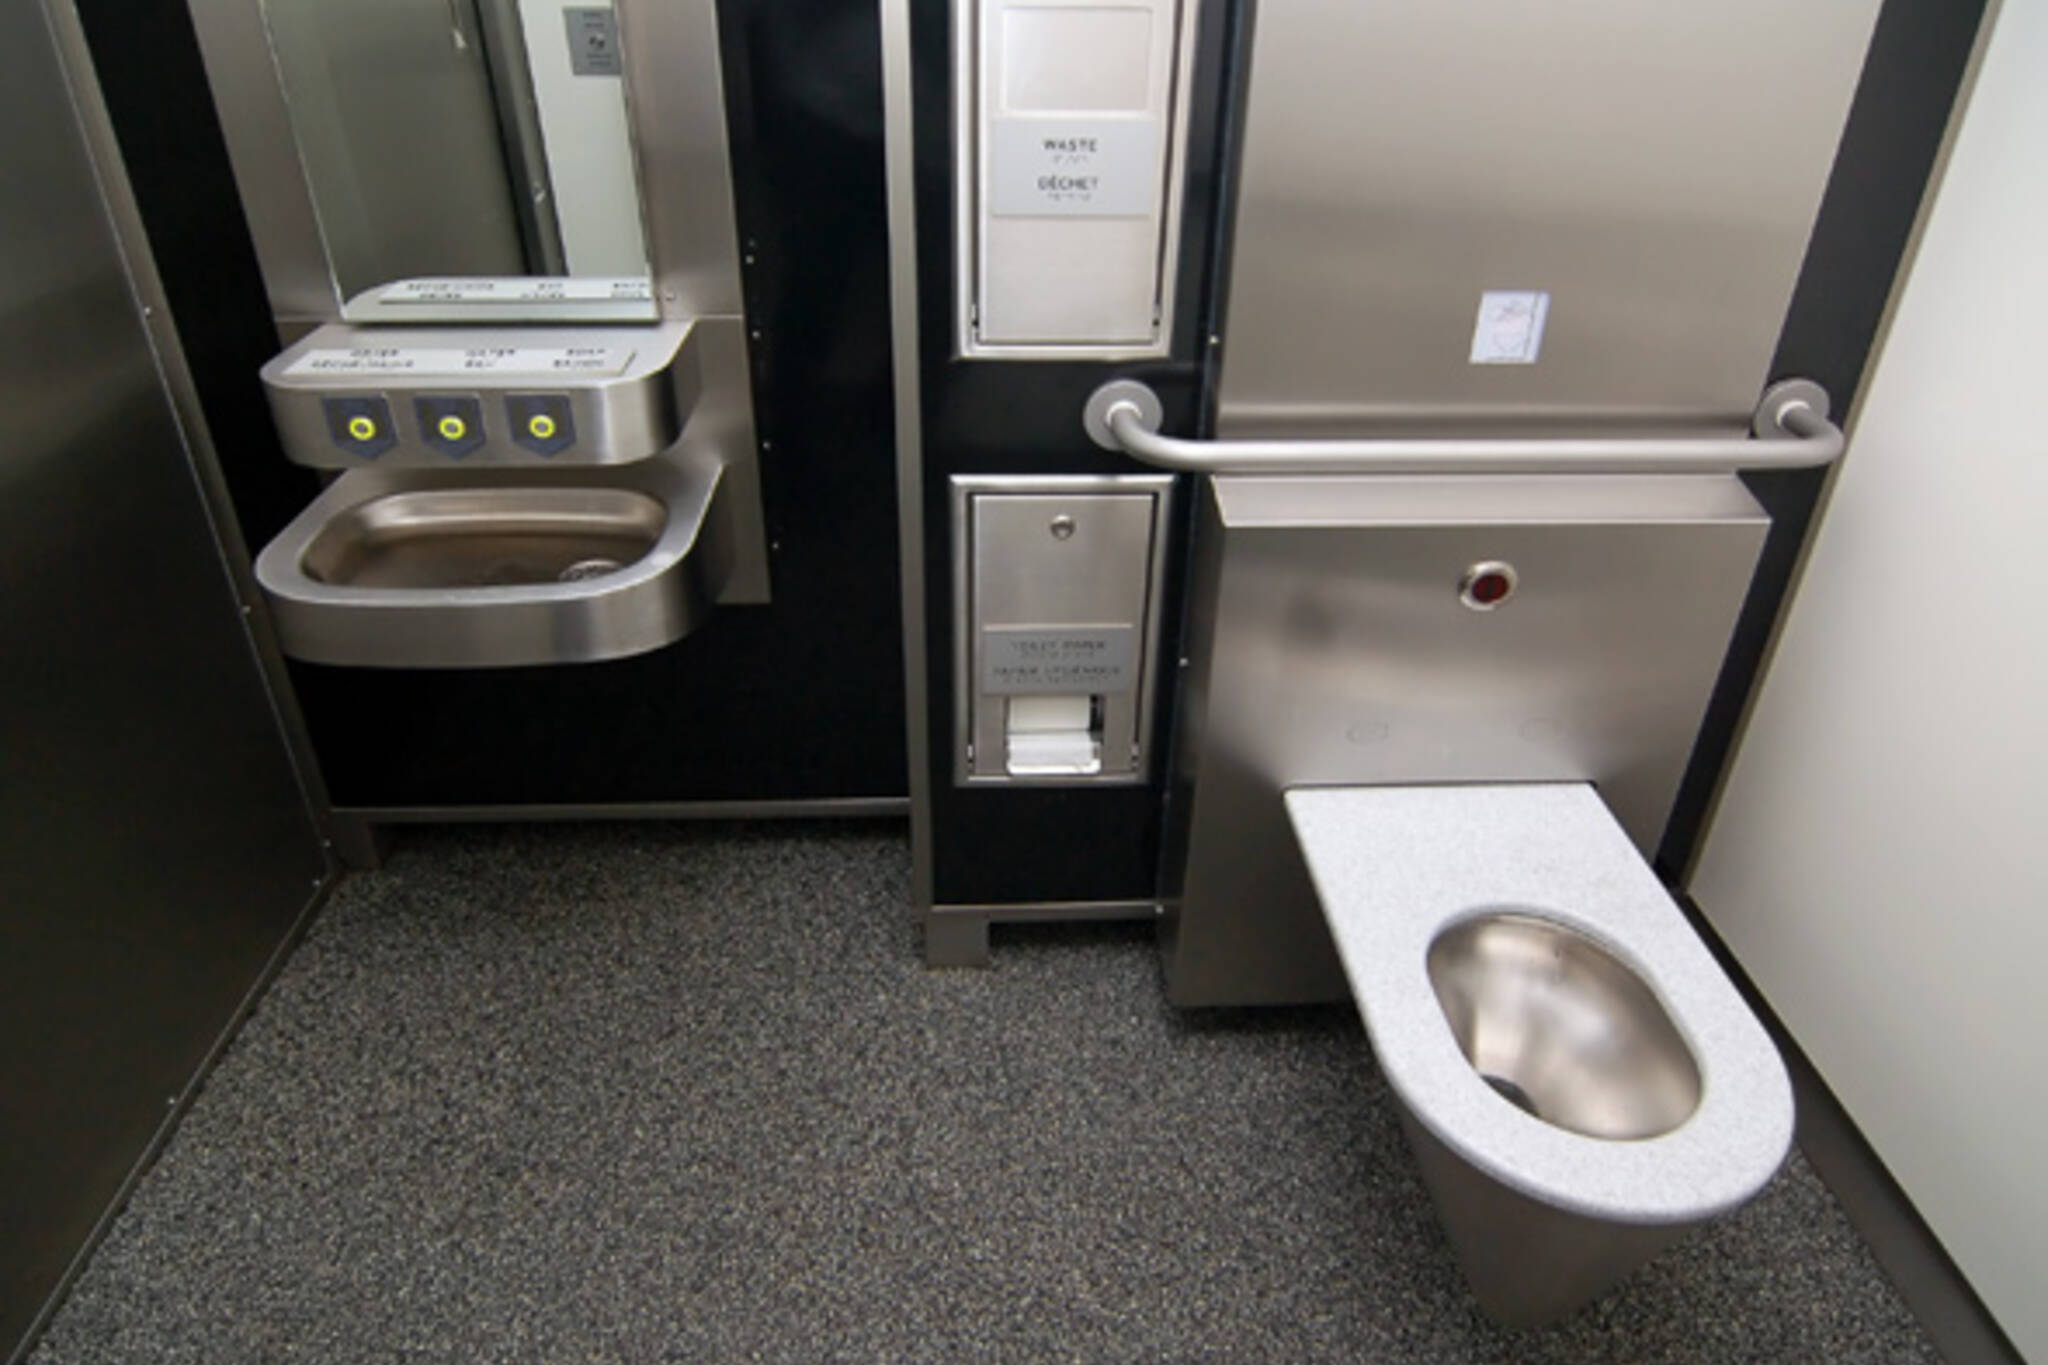 Toronto Pay Toilet automated